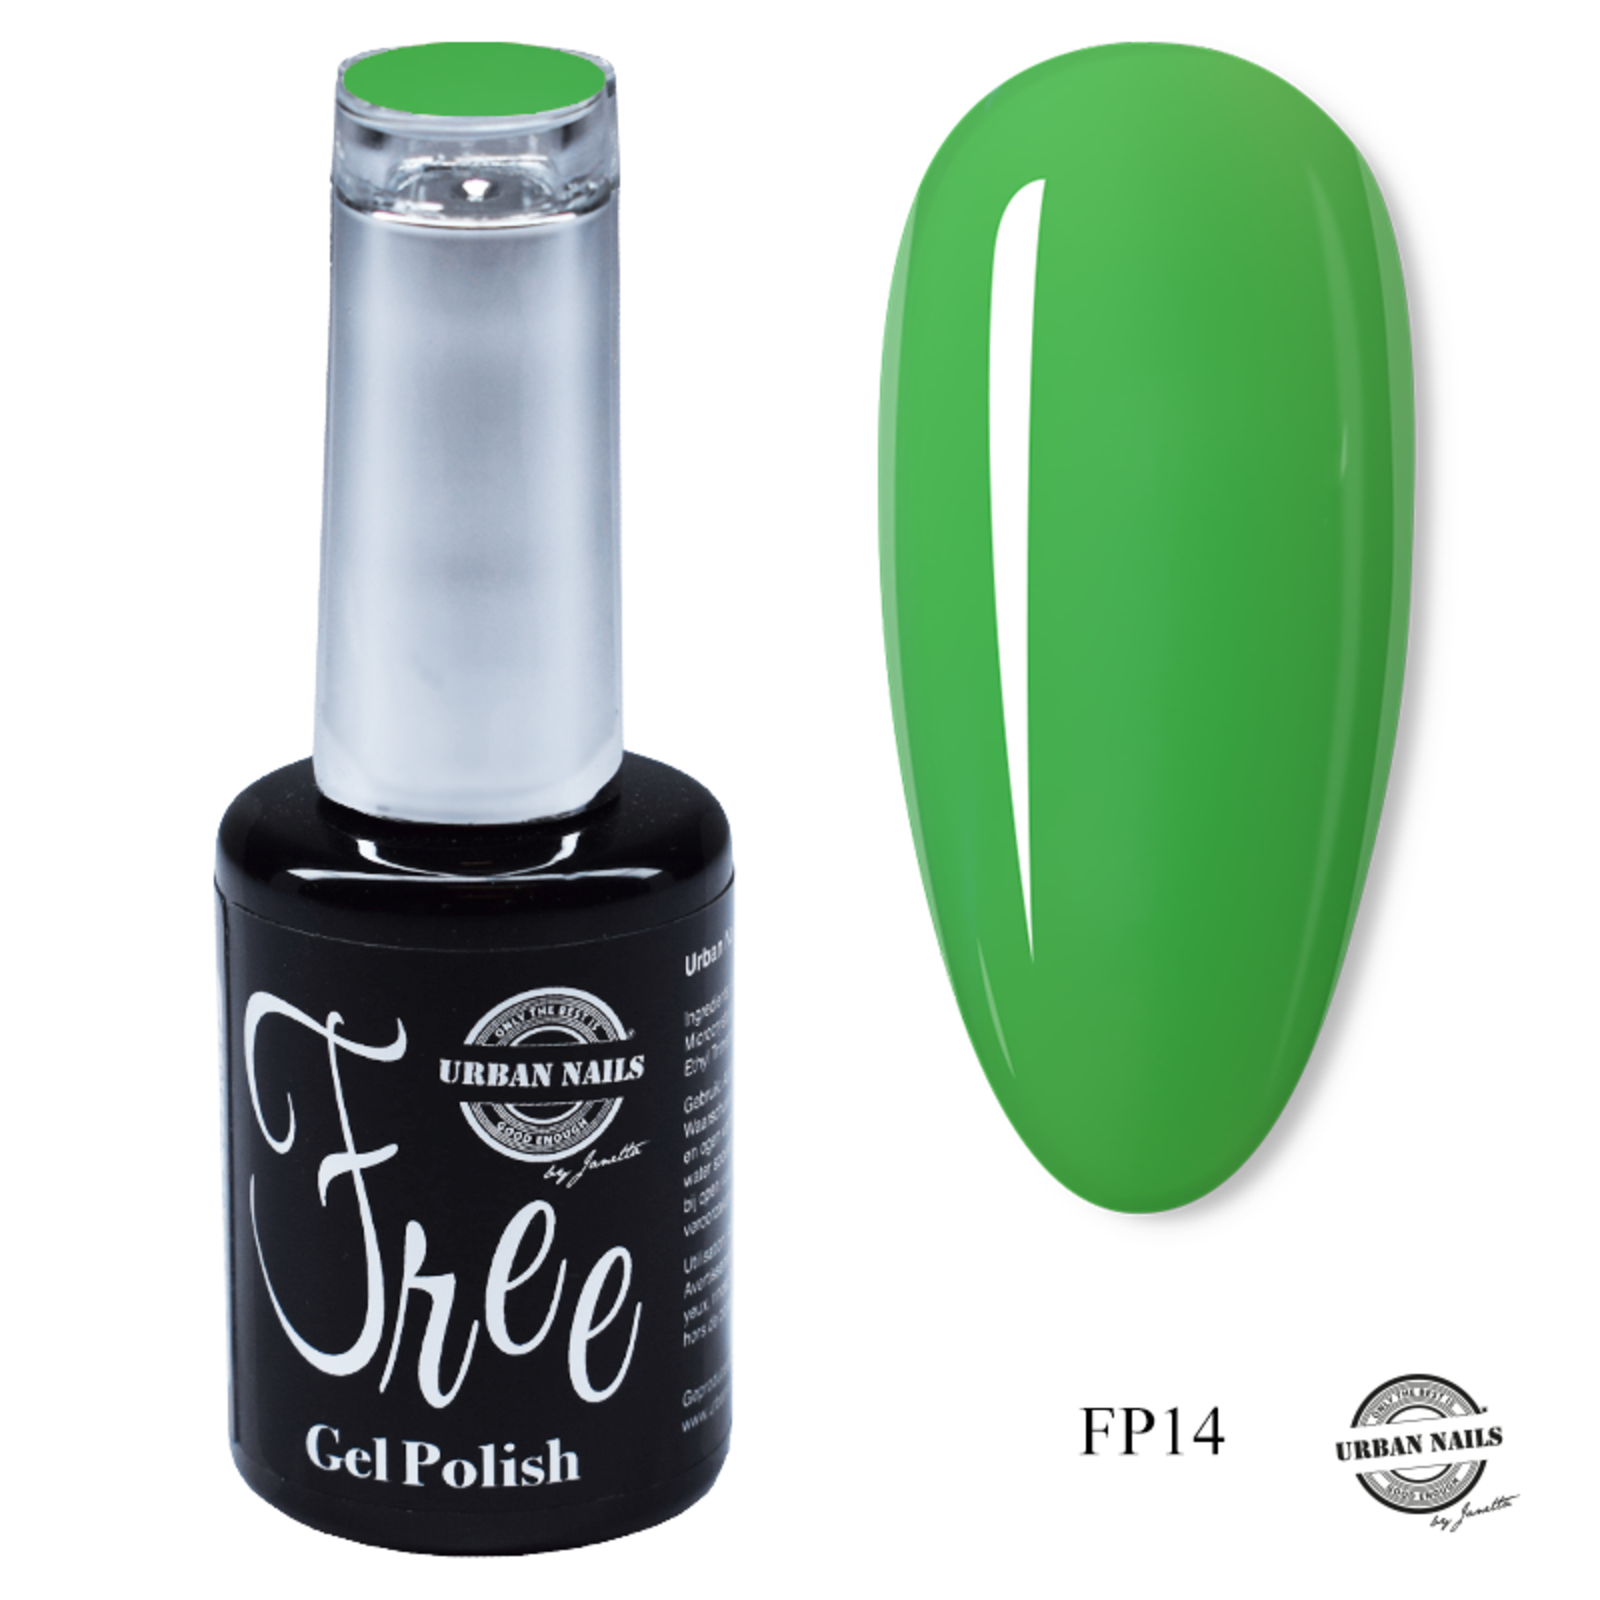 Urban nails Free Gelpolish FP14